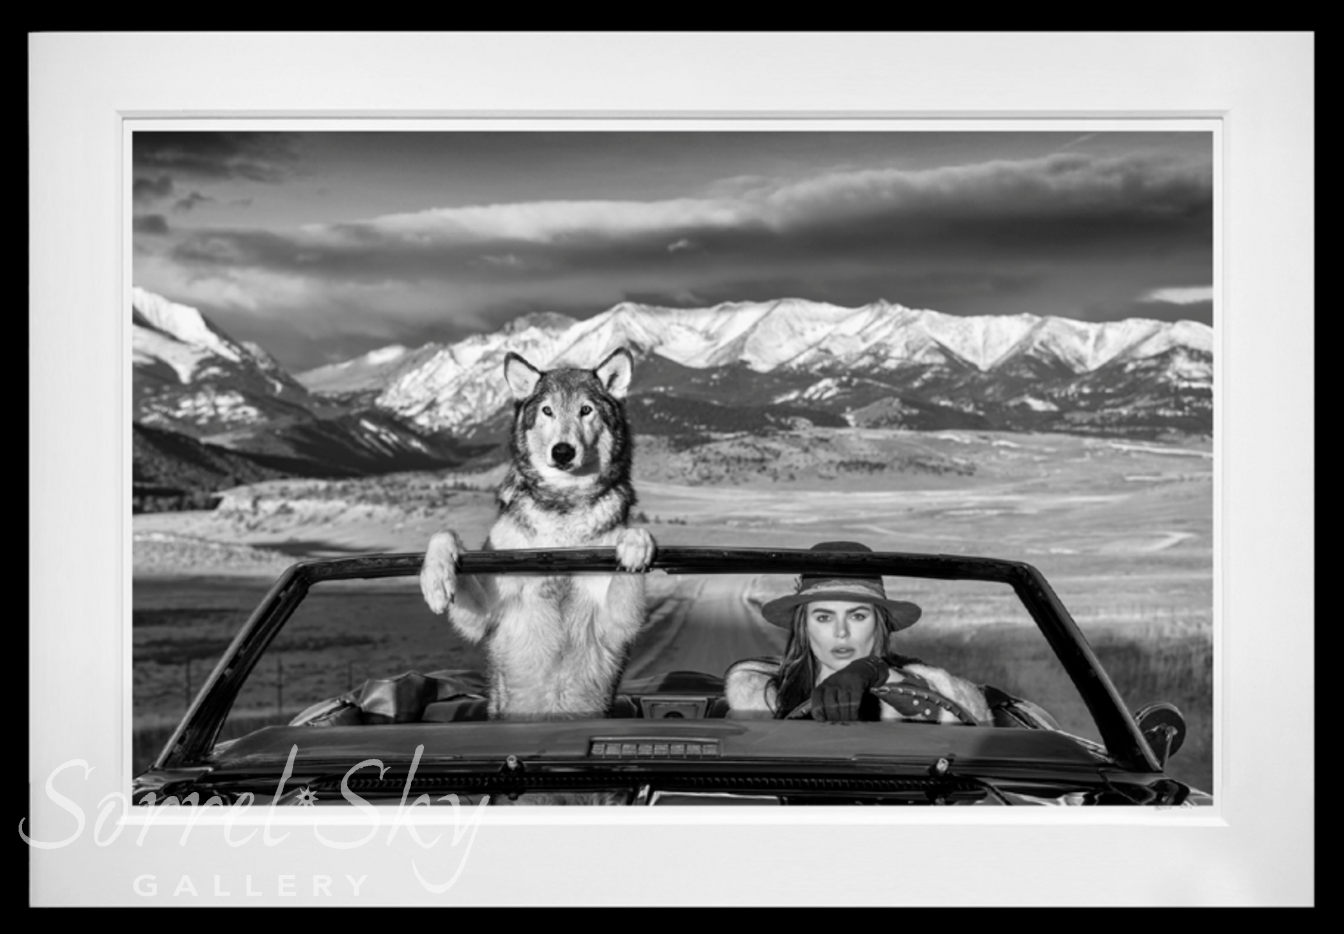 Montana Baby-Photographic Print-David Yarrow-Sorrel Sky Gallery